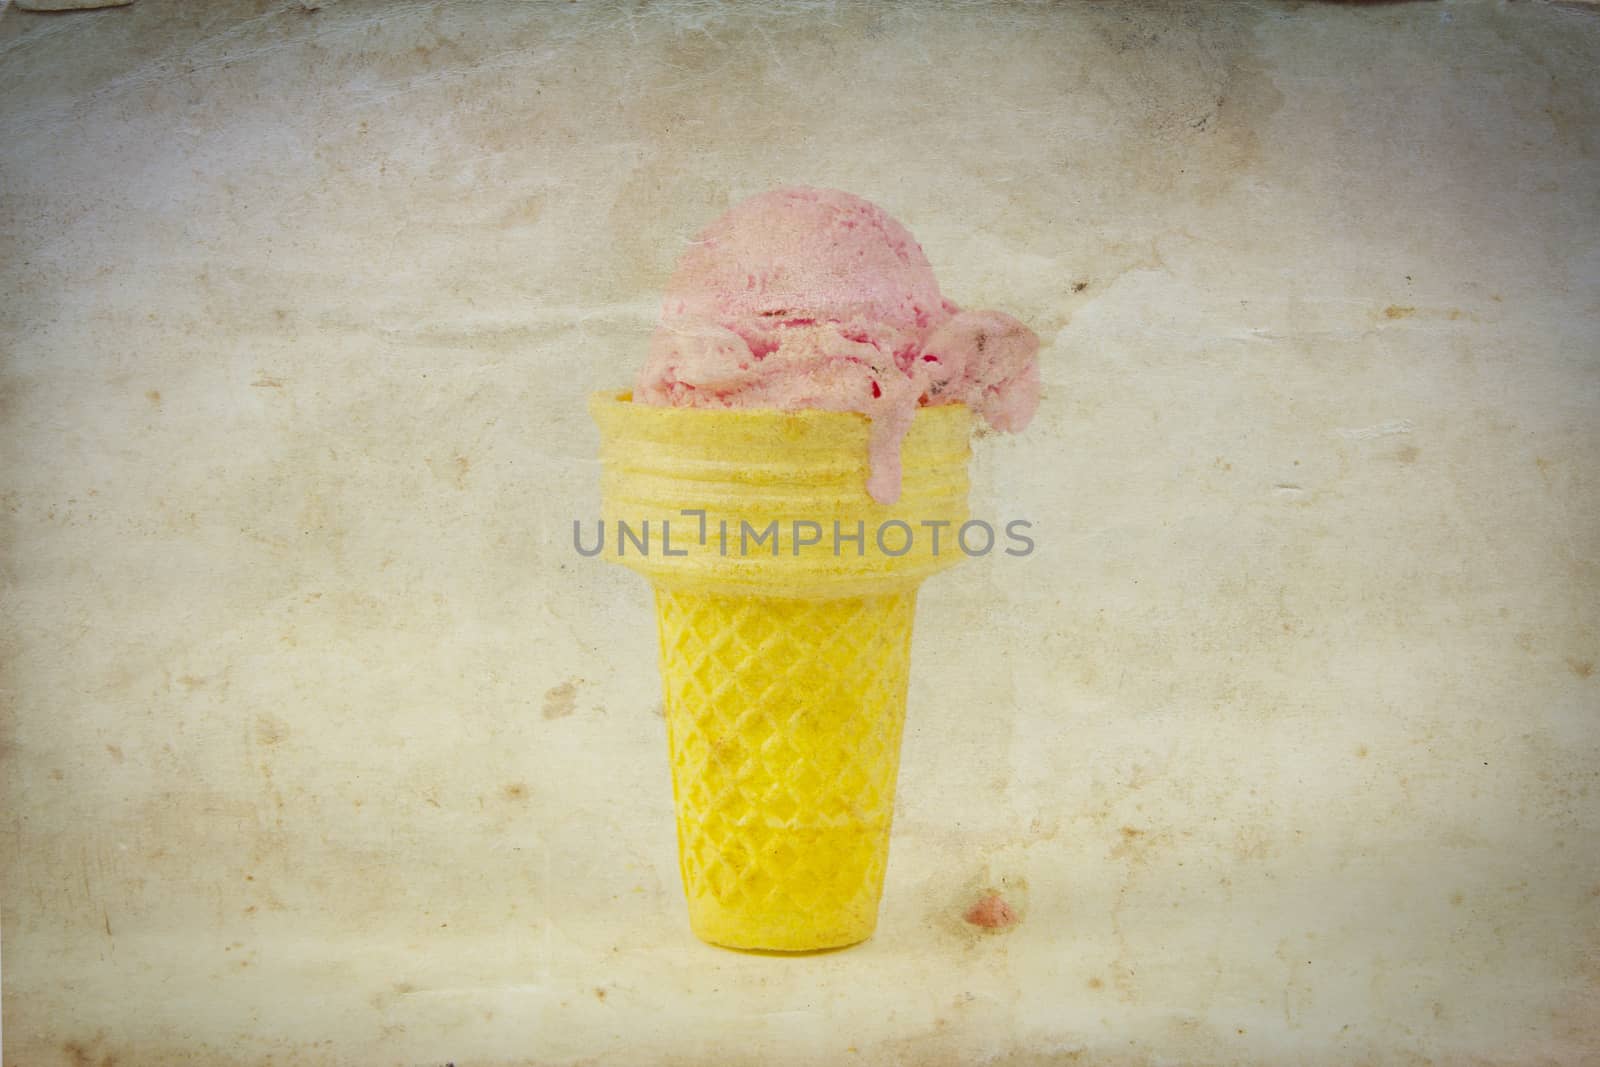 Scoop of ice cream on grunge paper background